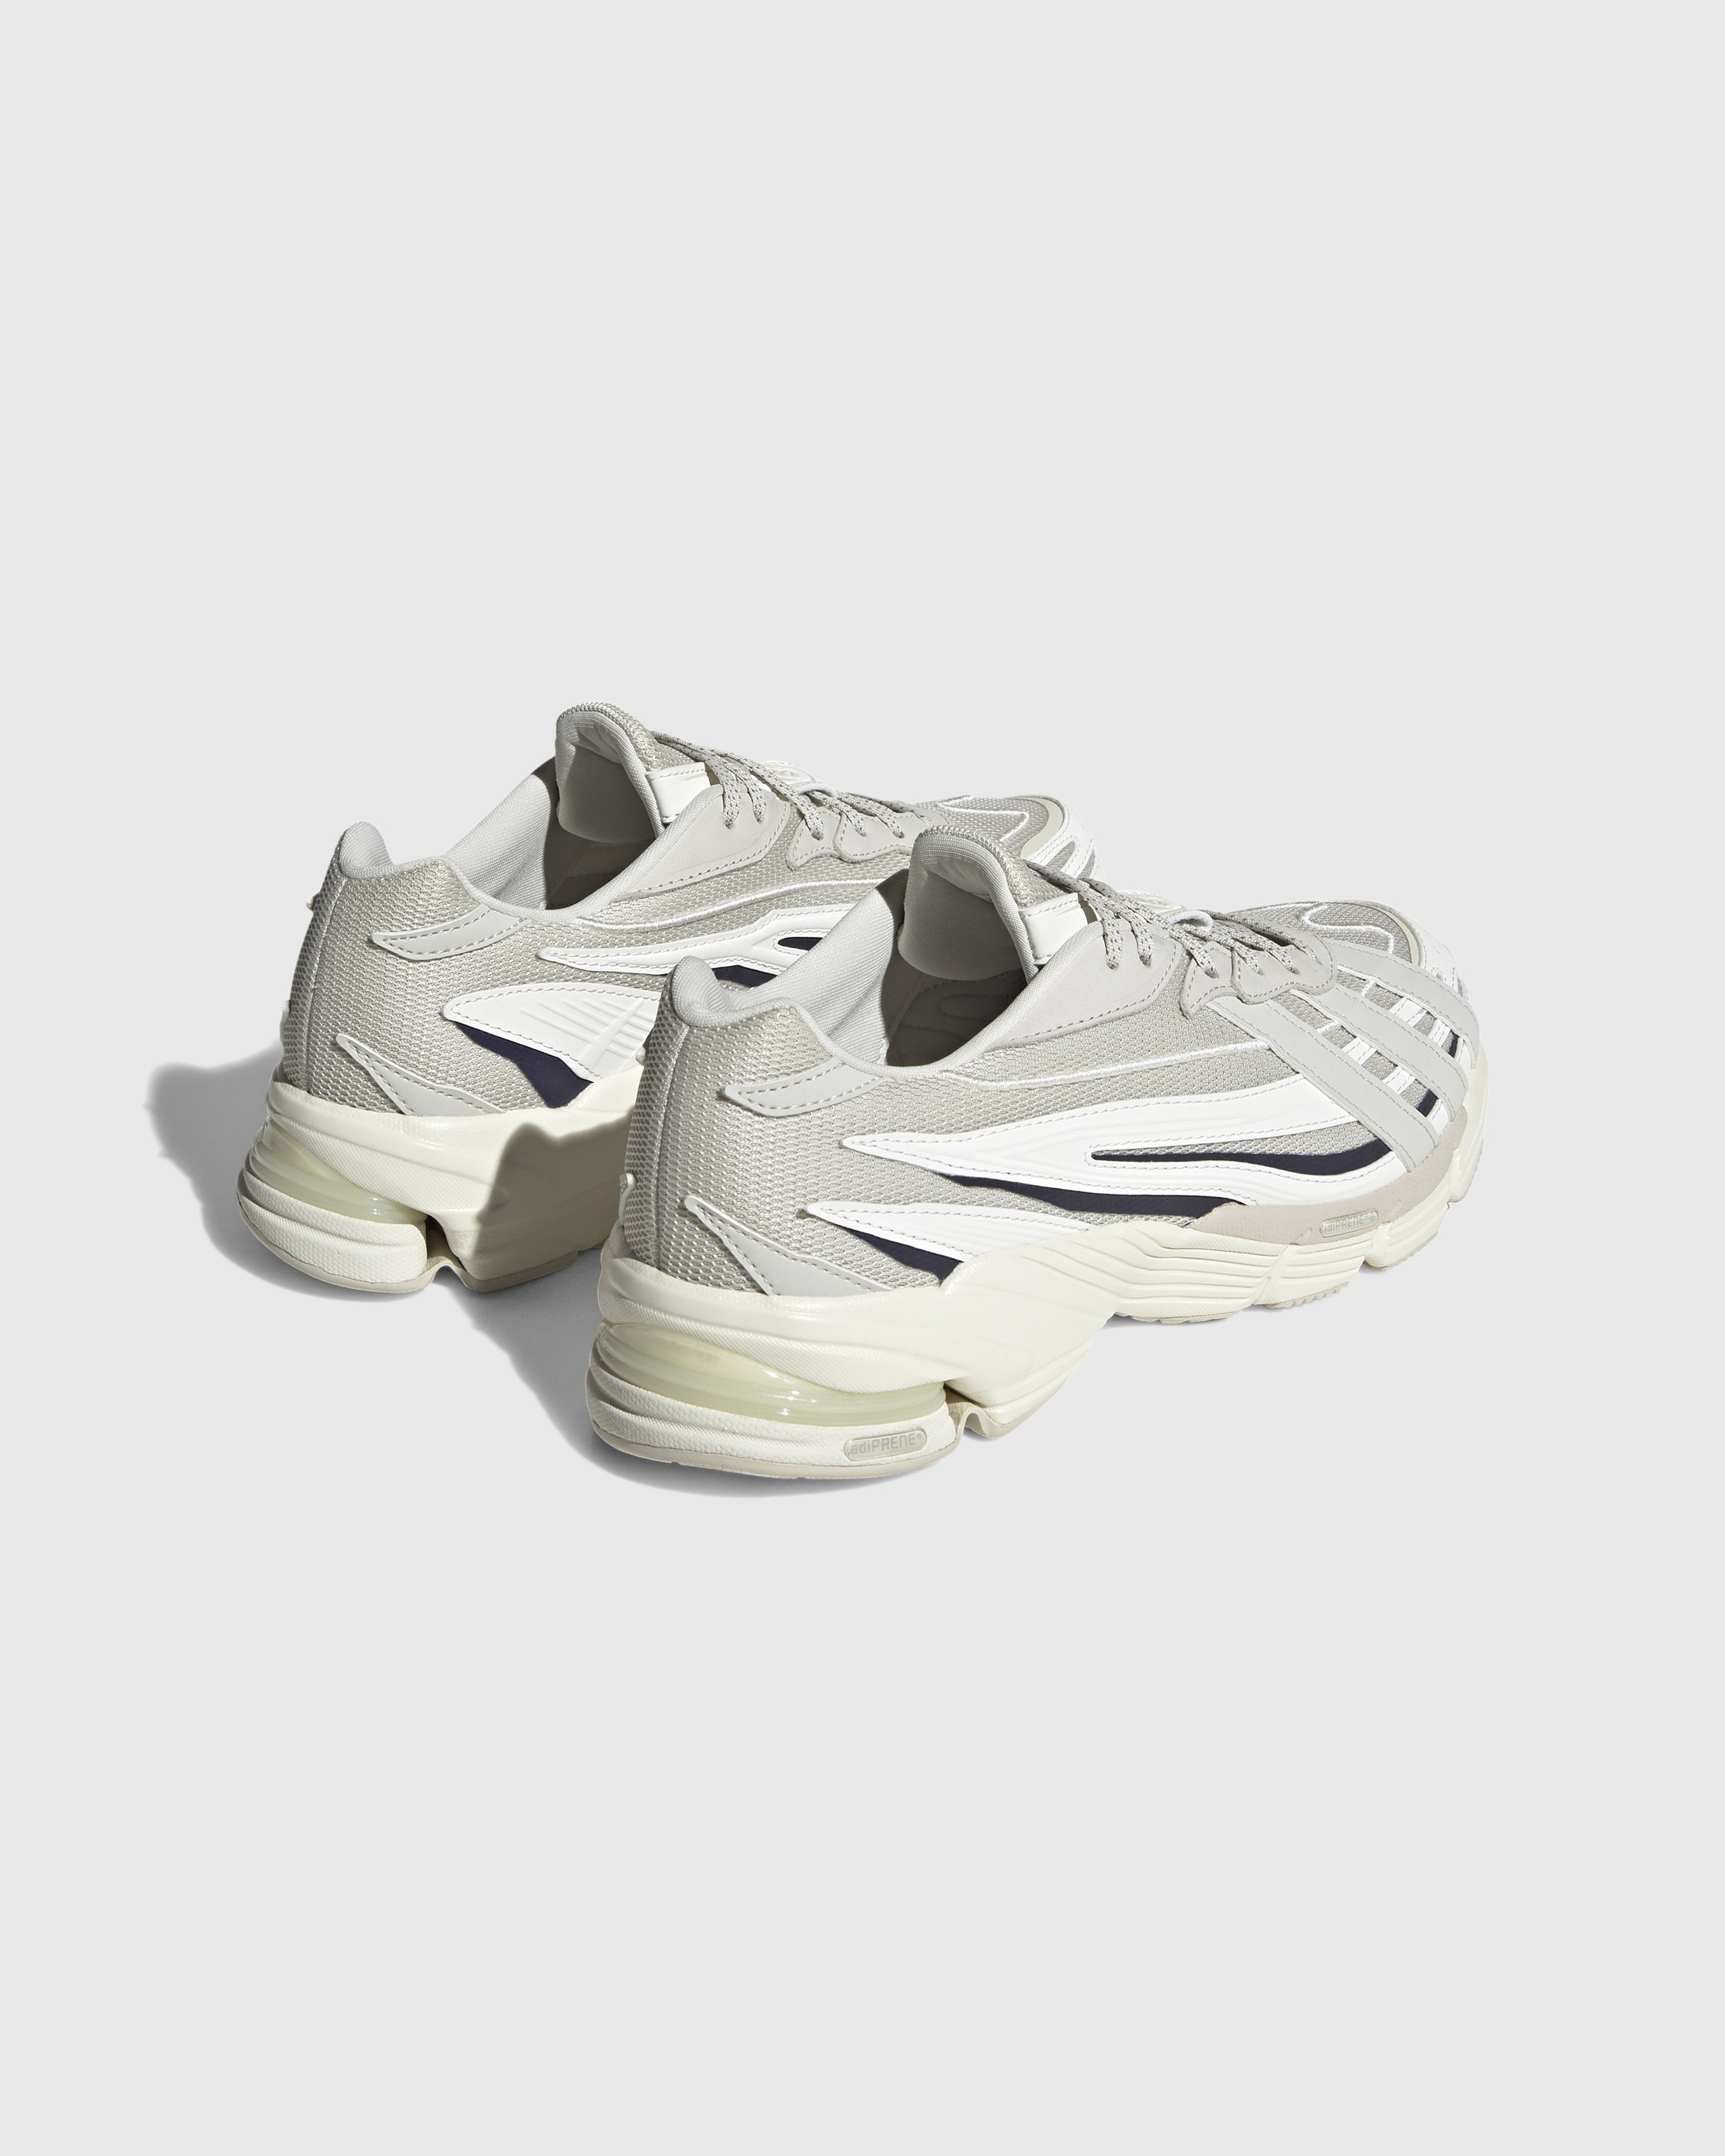 Adidas - Orketro Aluminum/White - Footwear - Grey - Image 3